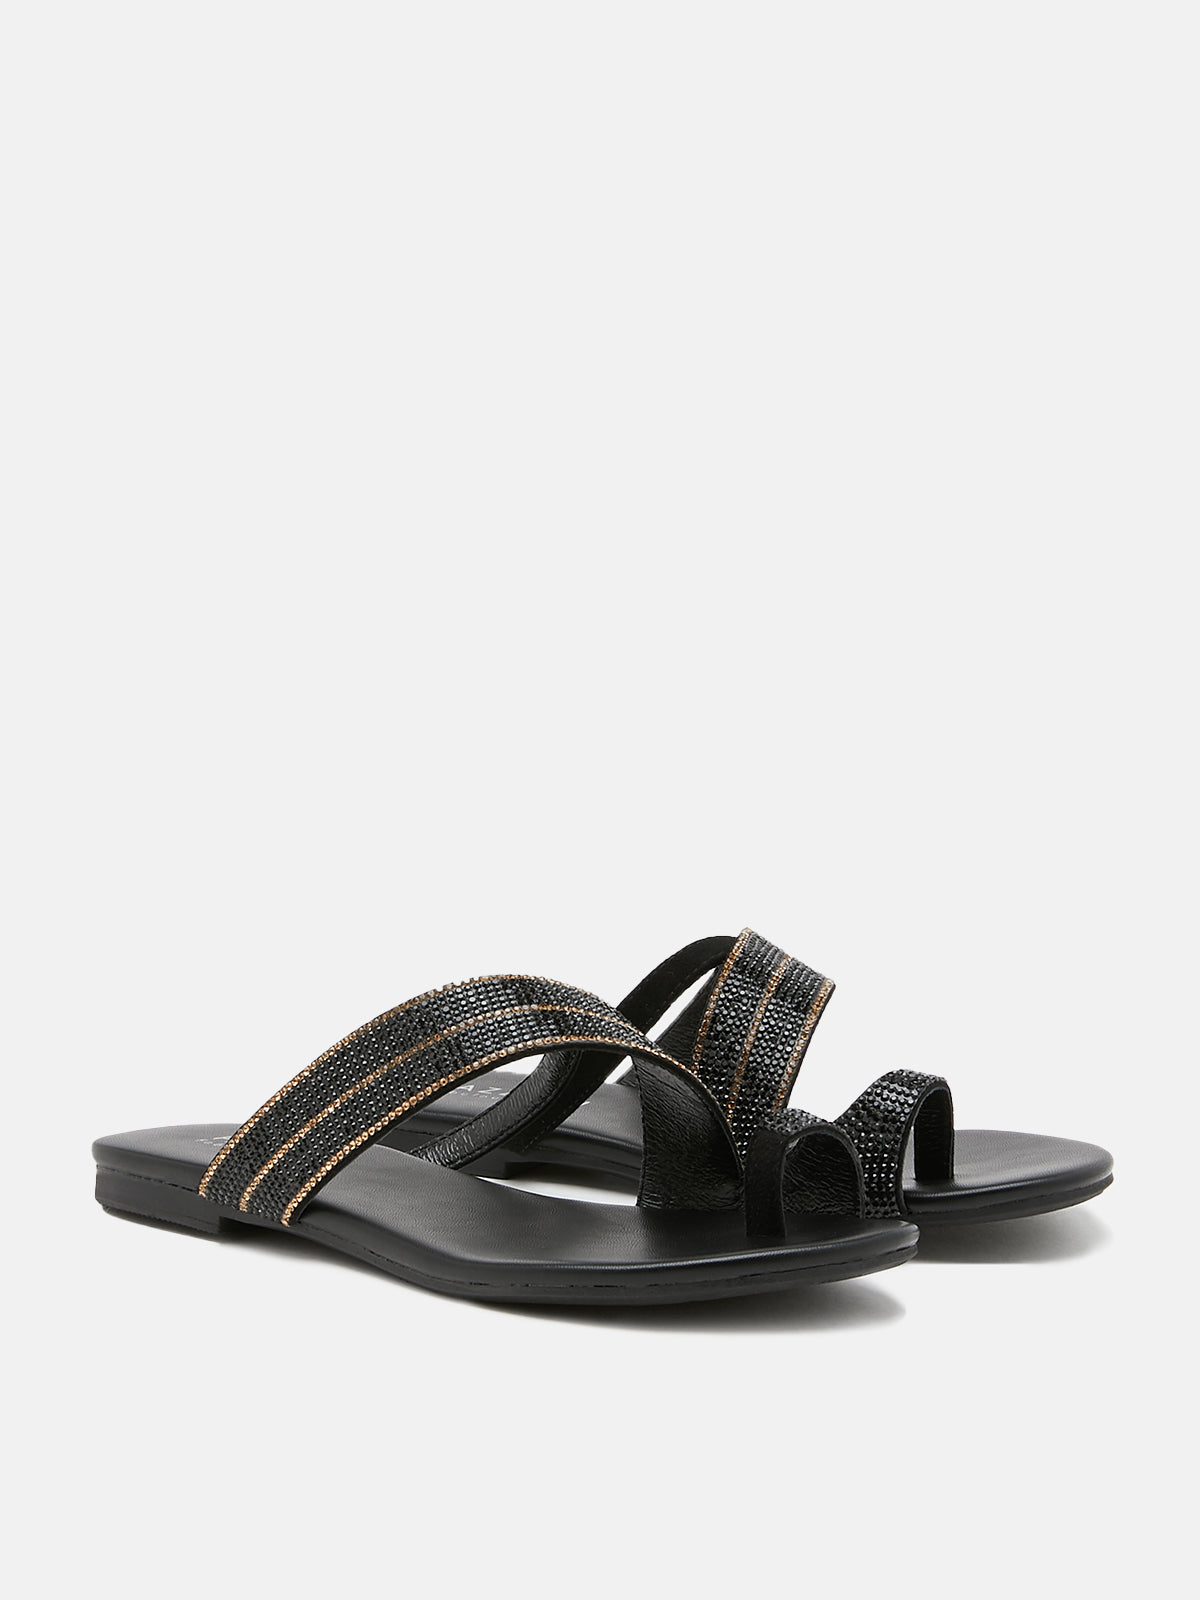 PAZZION, Lauren Glistening Embellished Leather Slide Sandals, Black